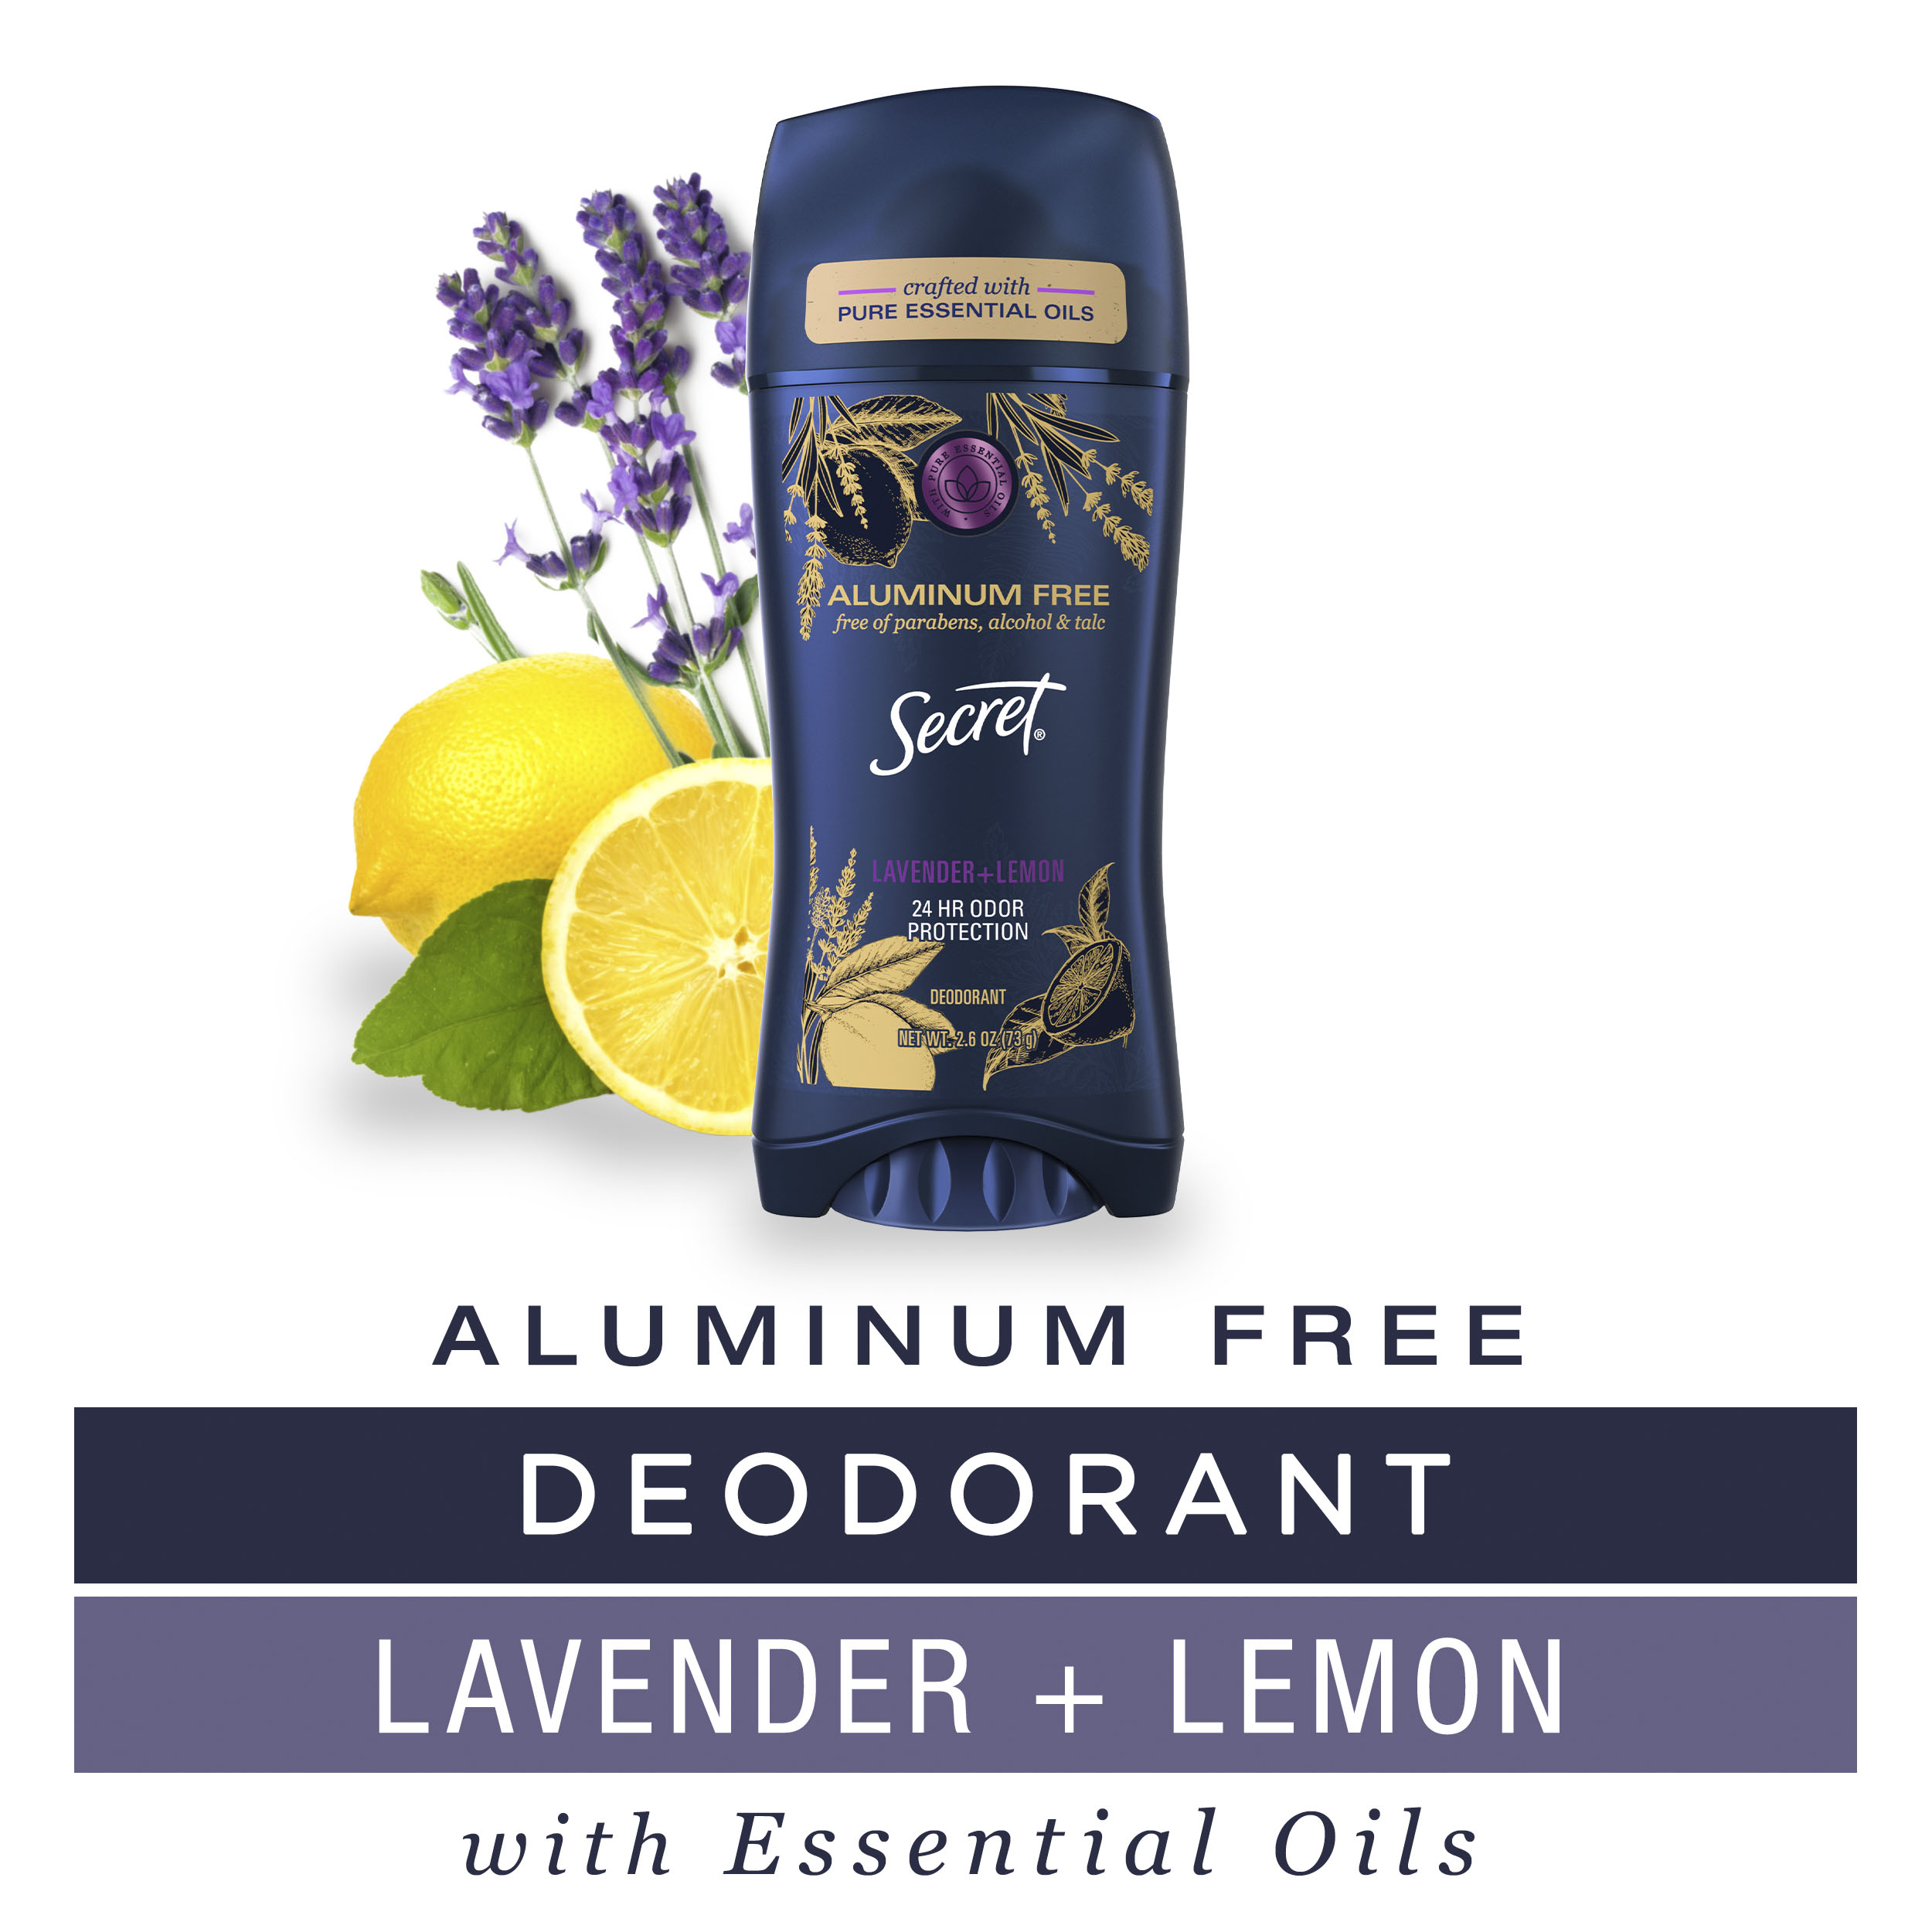 Secret Aluminum Free Deodorant for Women with Essential Oils Lavender Lemon, 2.6 oz - image 1 of 9